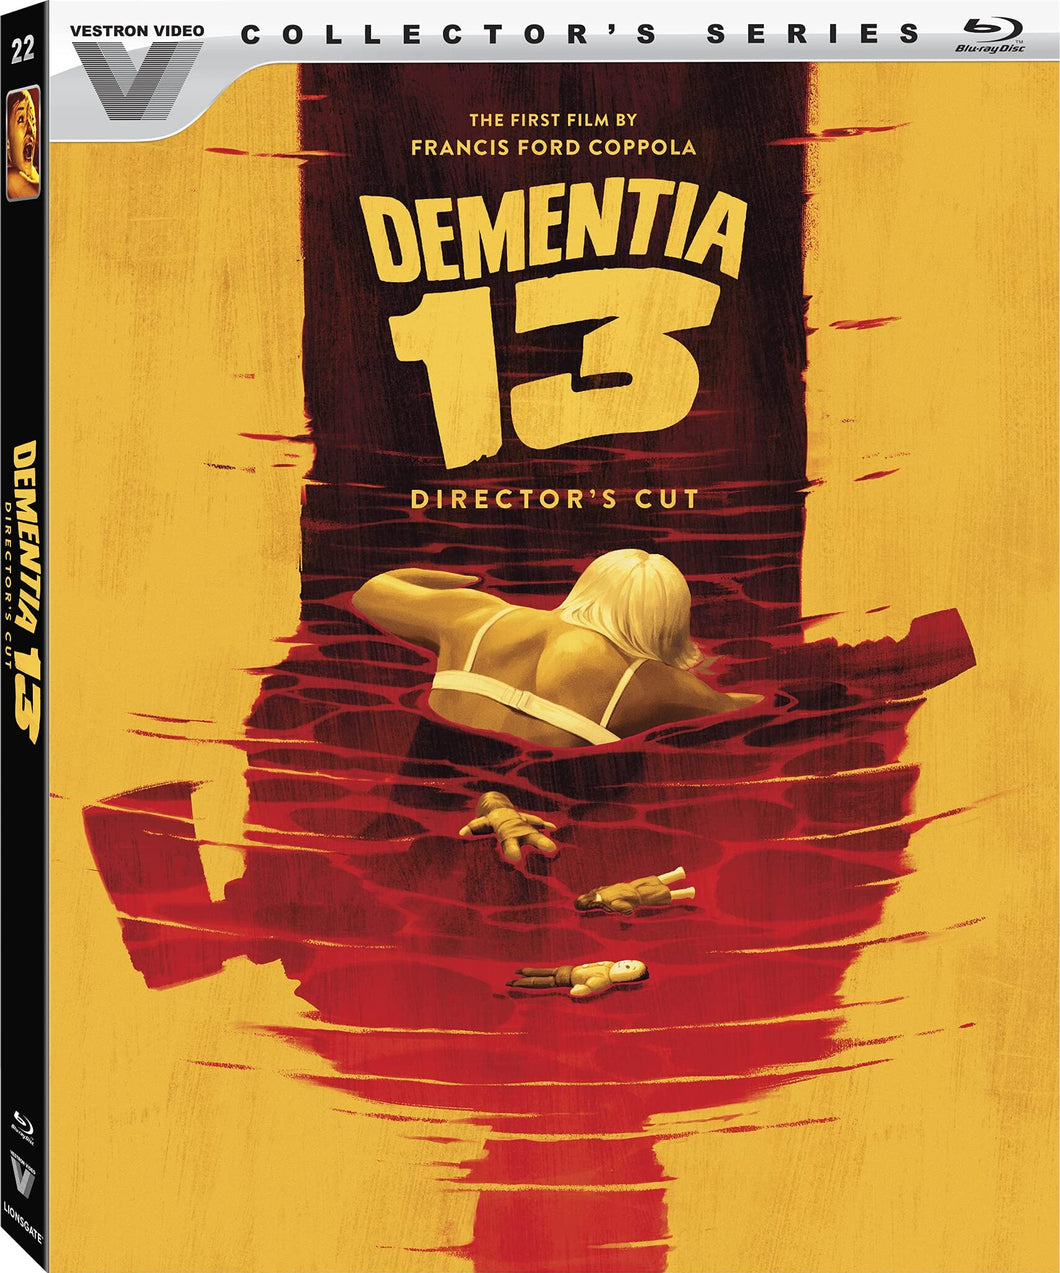 Dementia 13 Director's Cut (1963) de Francis Ford Coppola - front cover